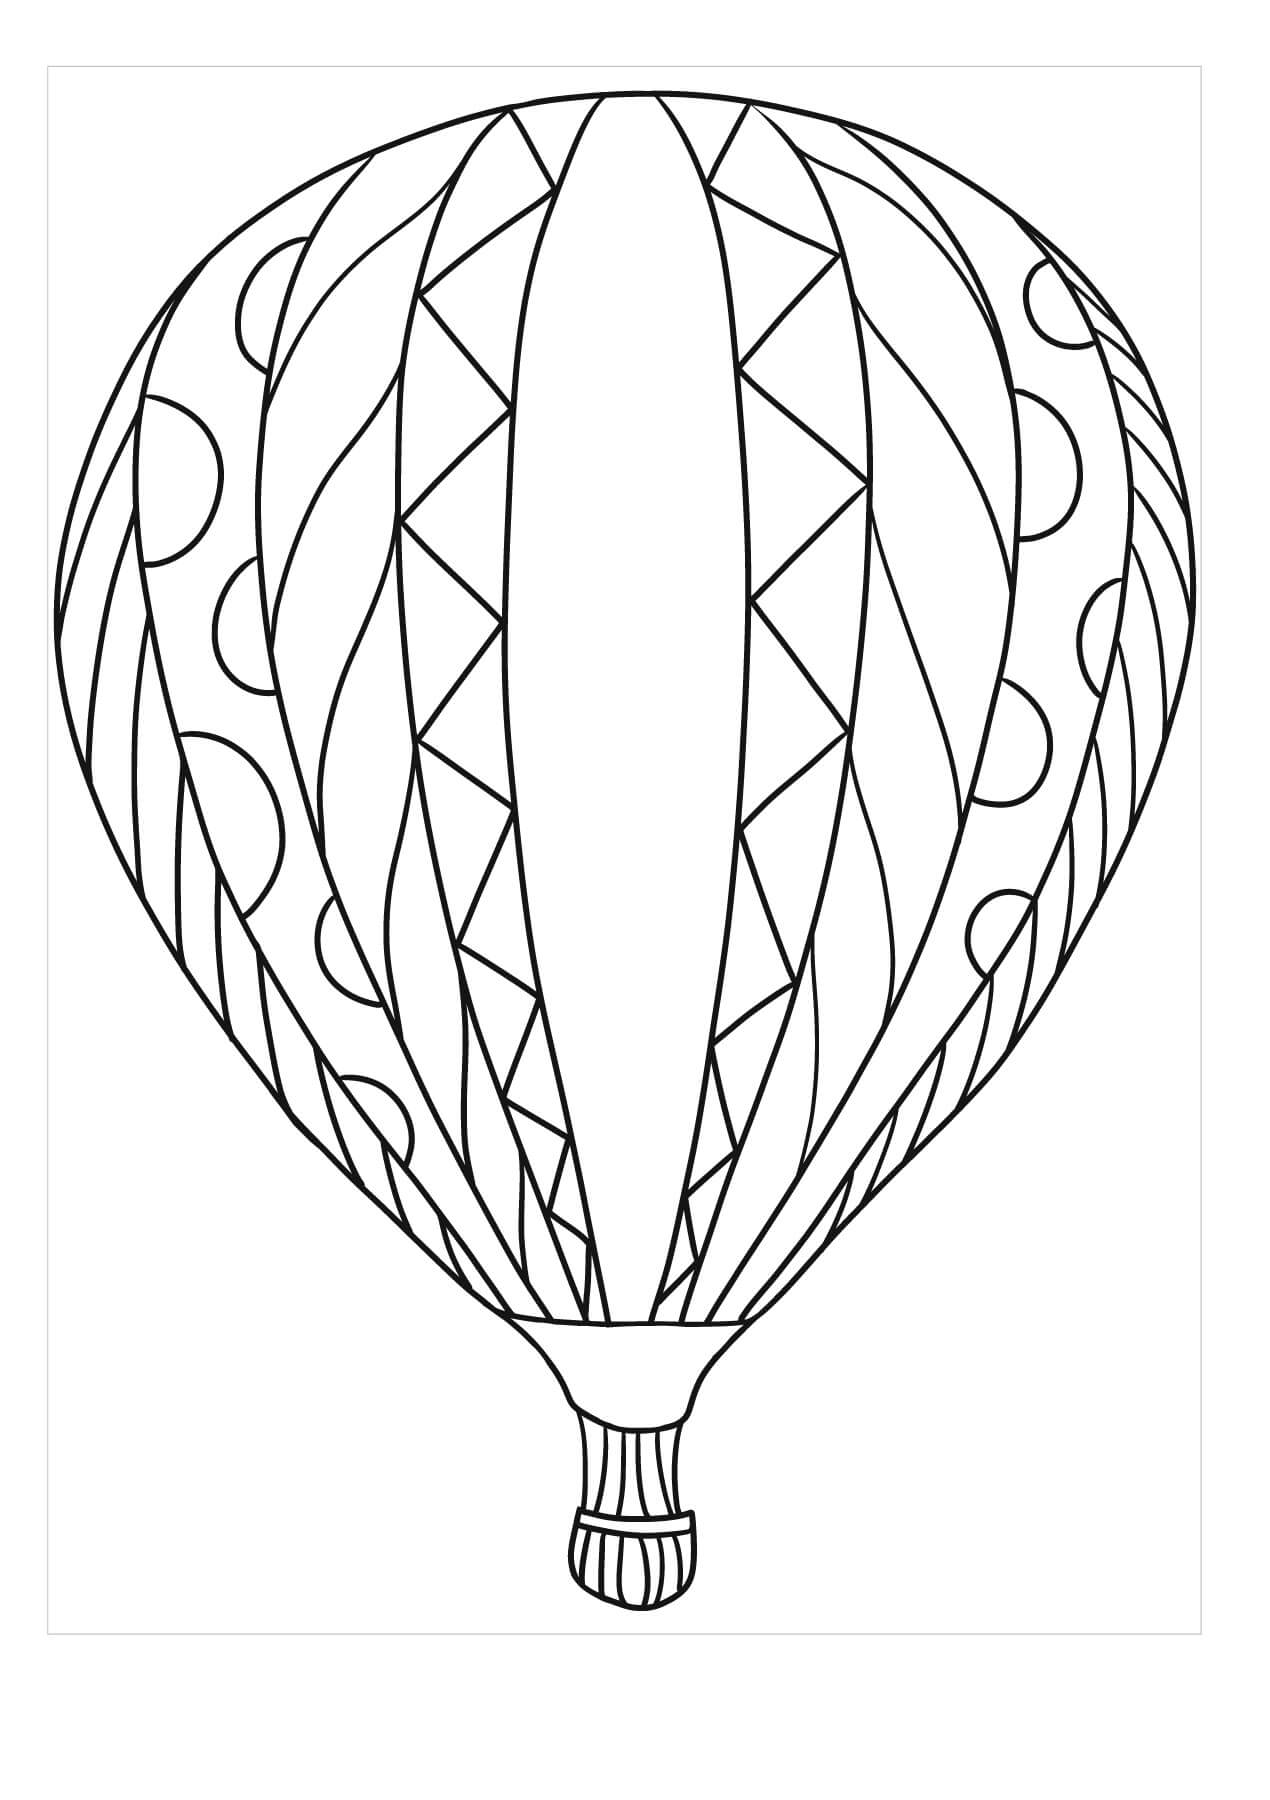 Balão de ar Quente Adulto para colorir